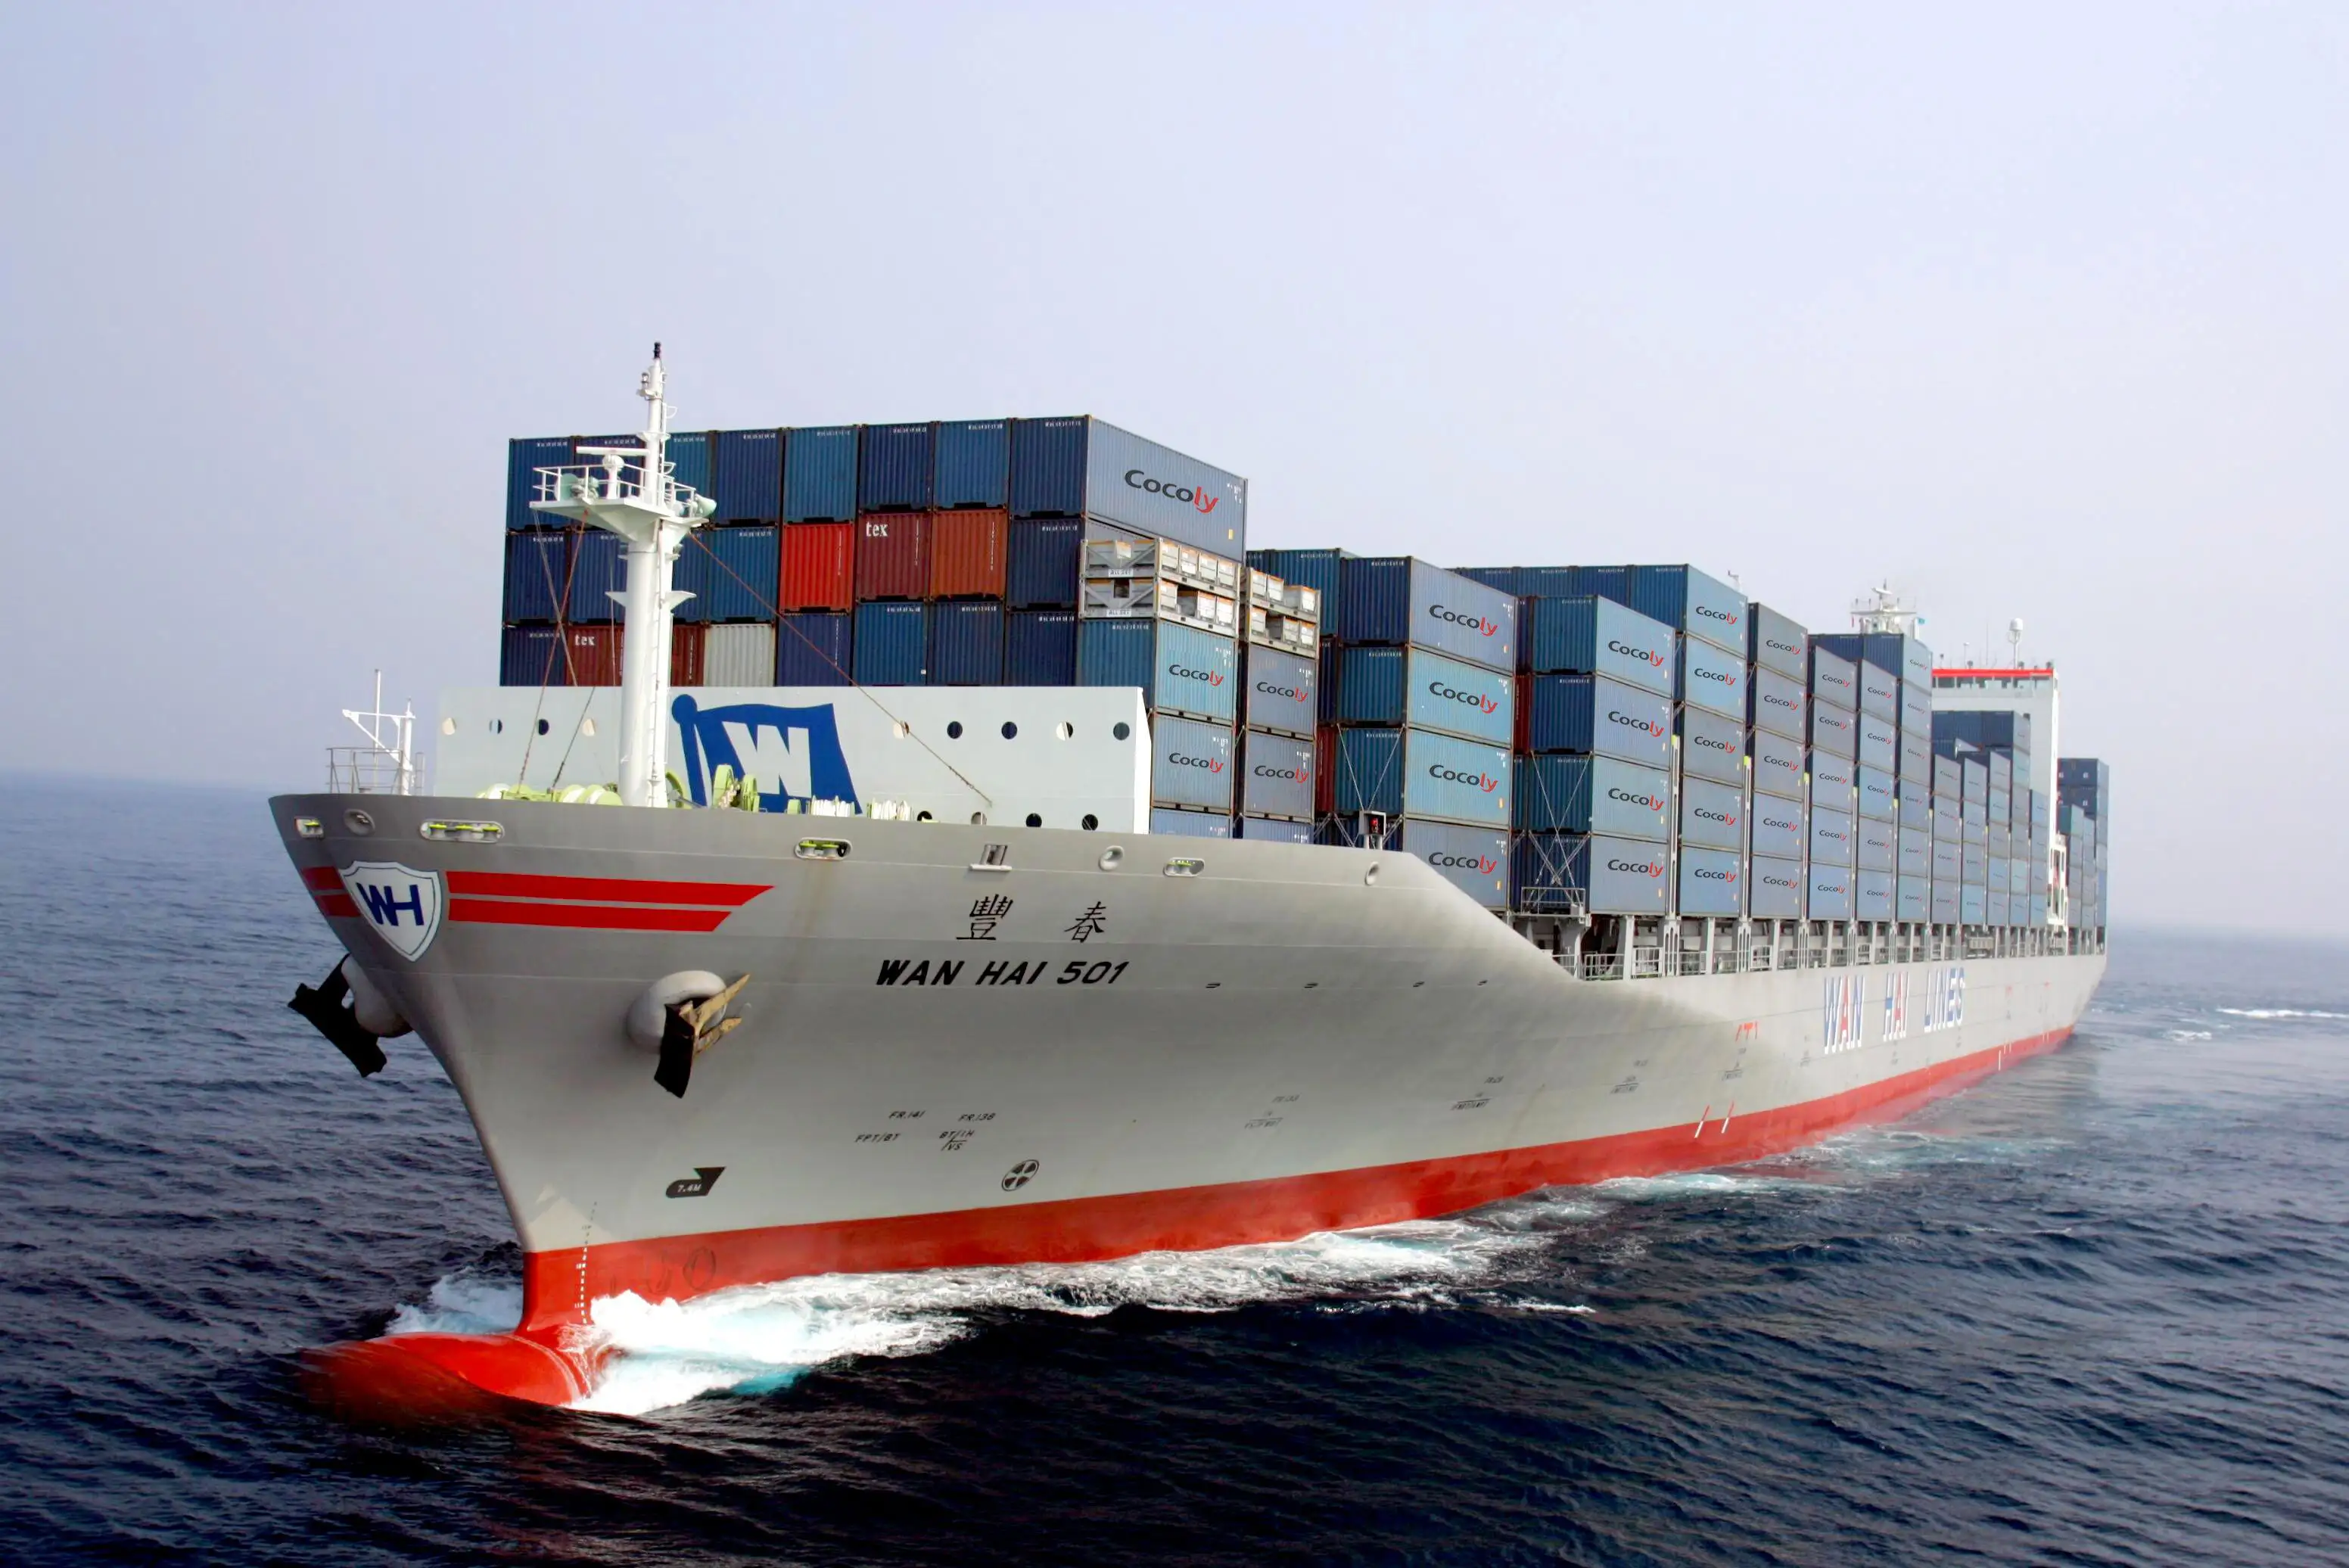 international freight forwarding companies